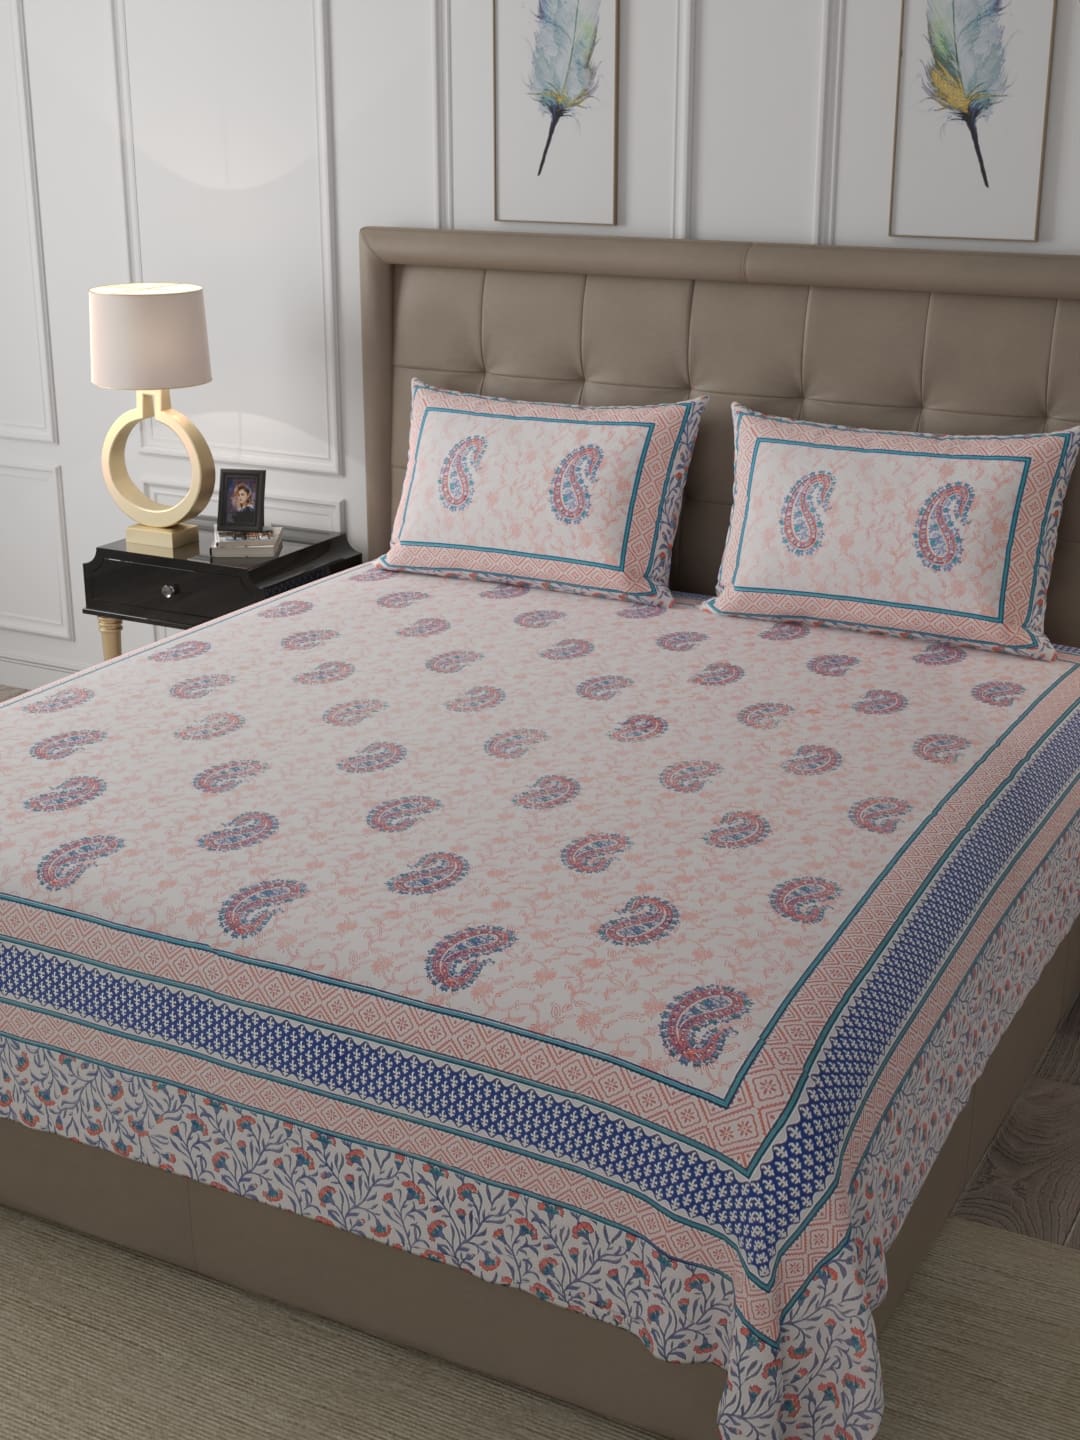 100% Cotton Premium King Size Bed Sheet (108x108) inch - Mirza